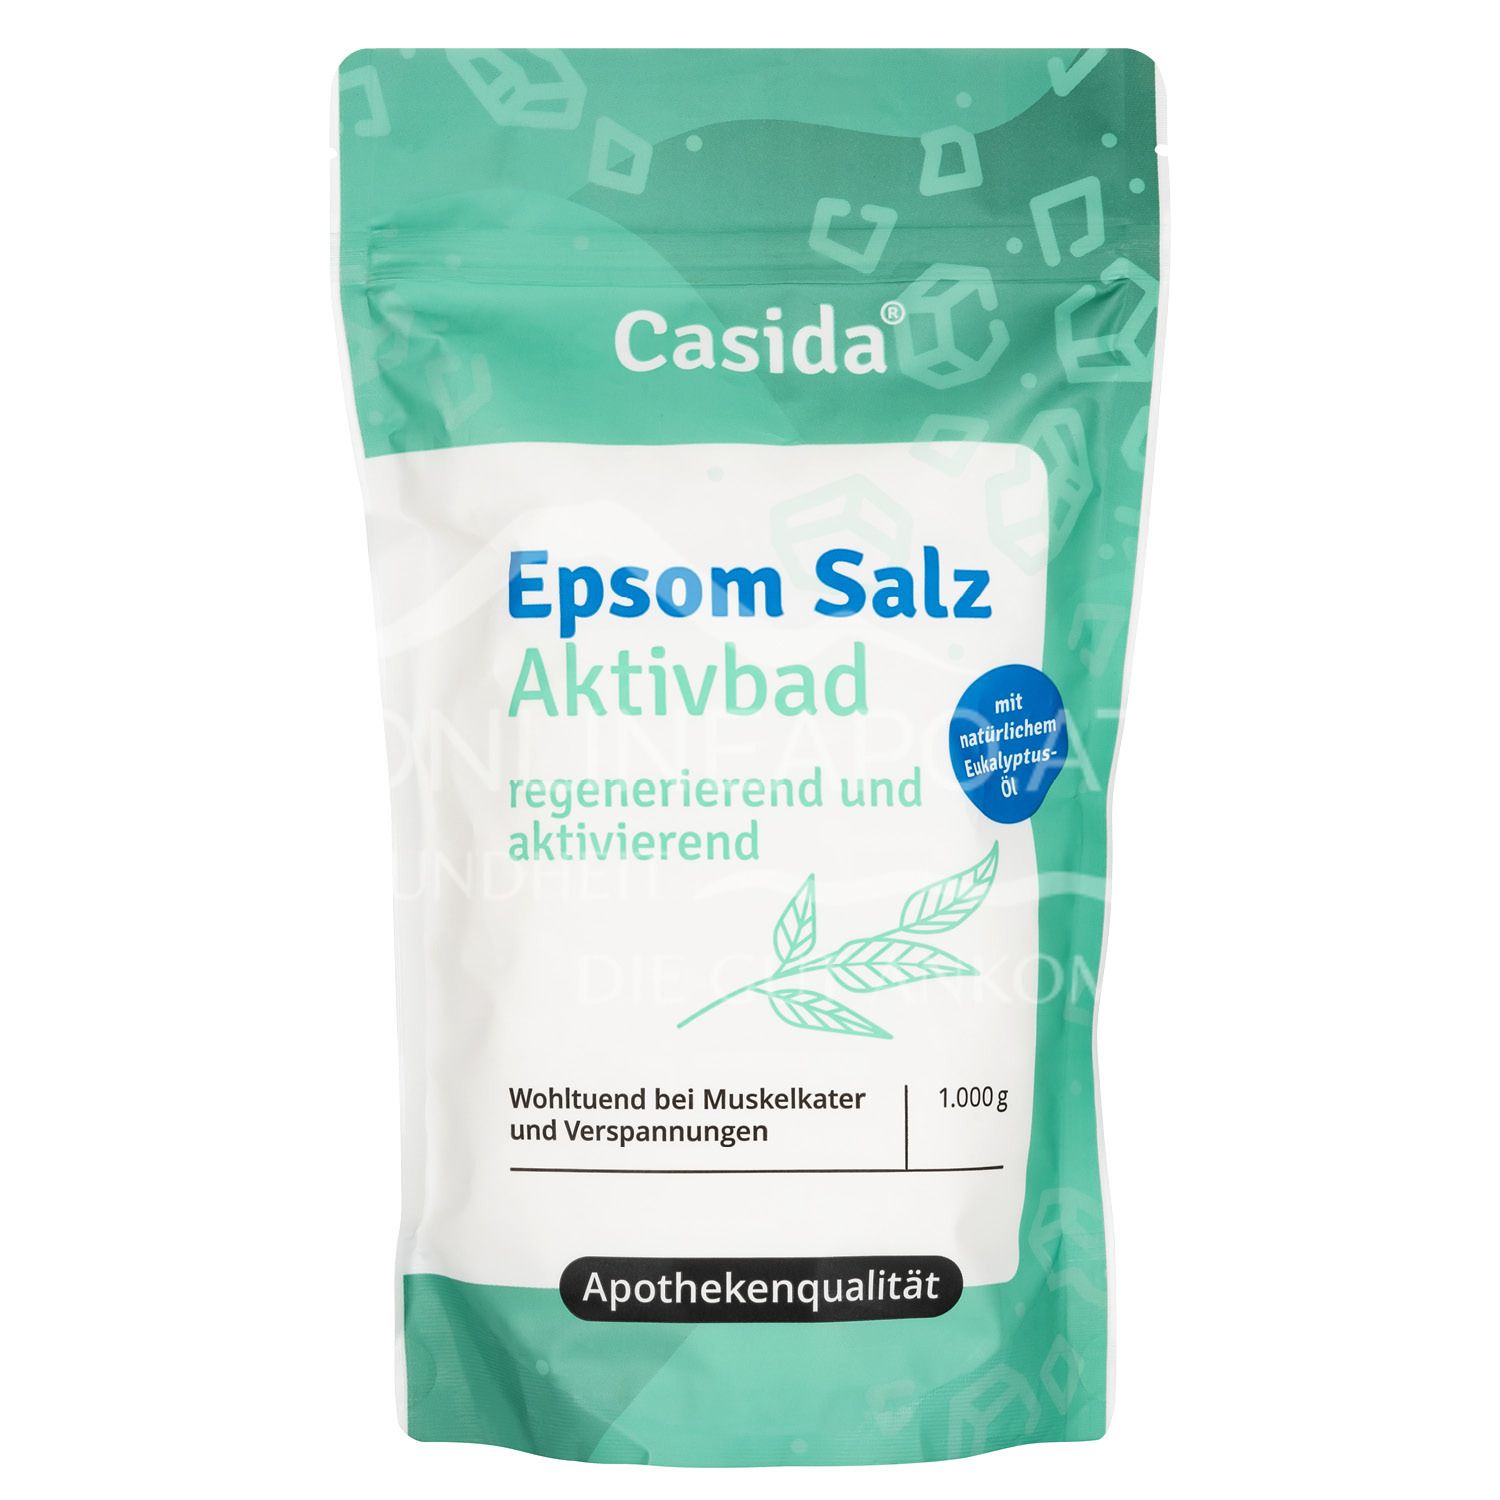 Casida Epsom Salz Aktivbad mit Eukalyptus und Rosmarin